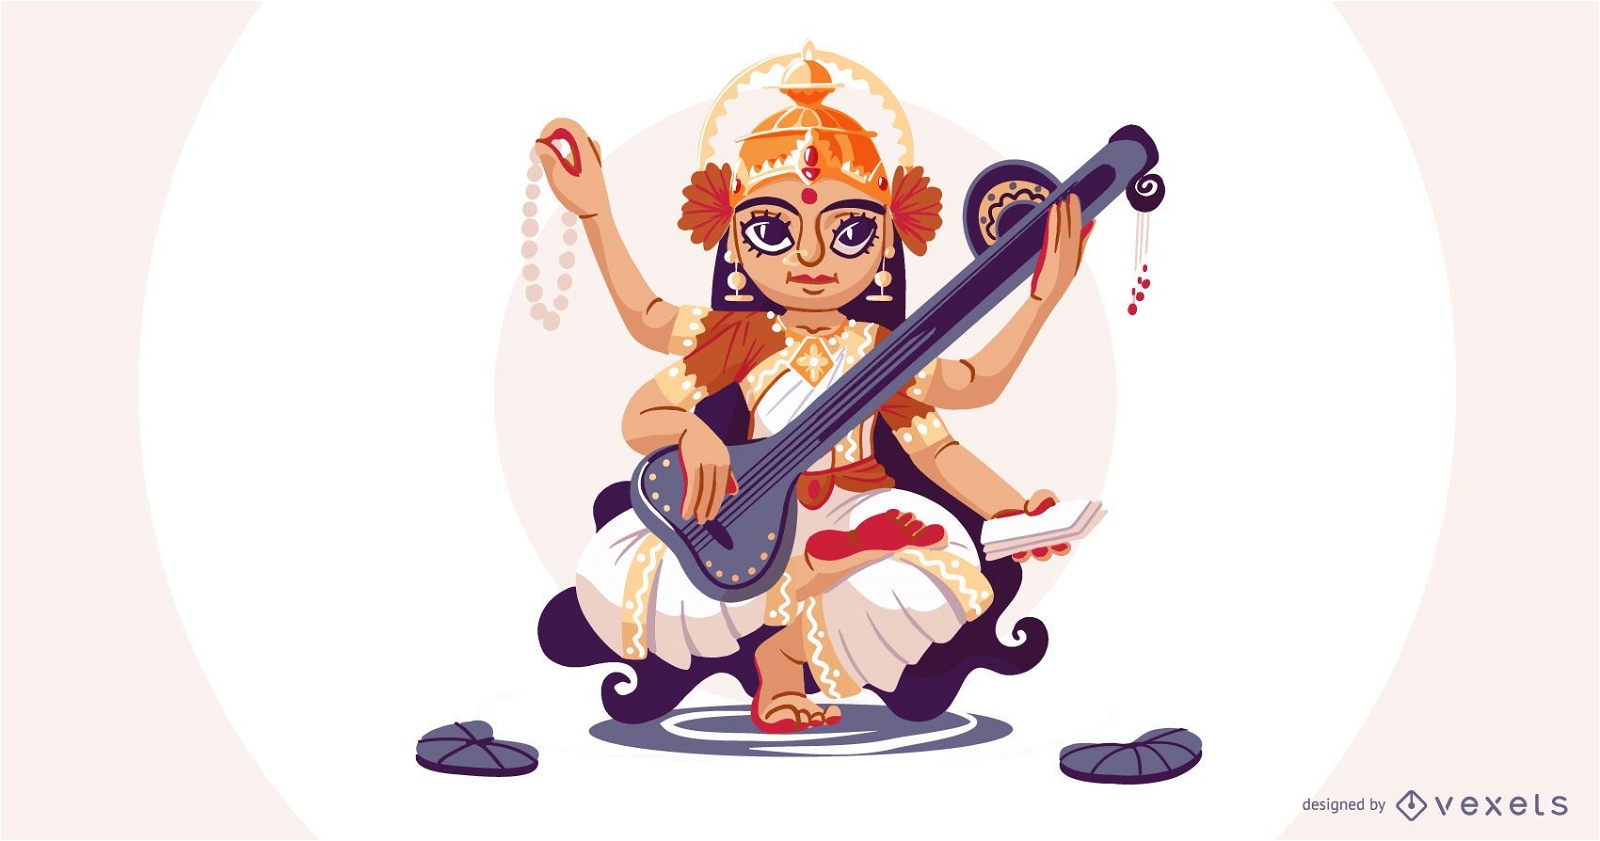 Ilustraci?n de la diosa hind? Saraswati